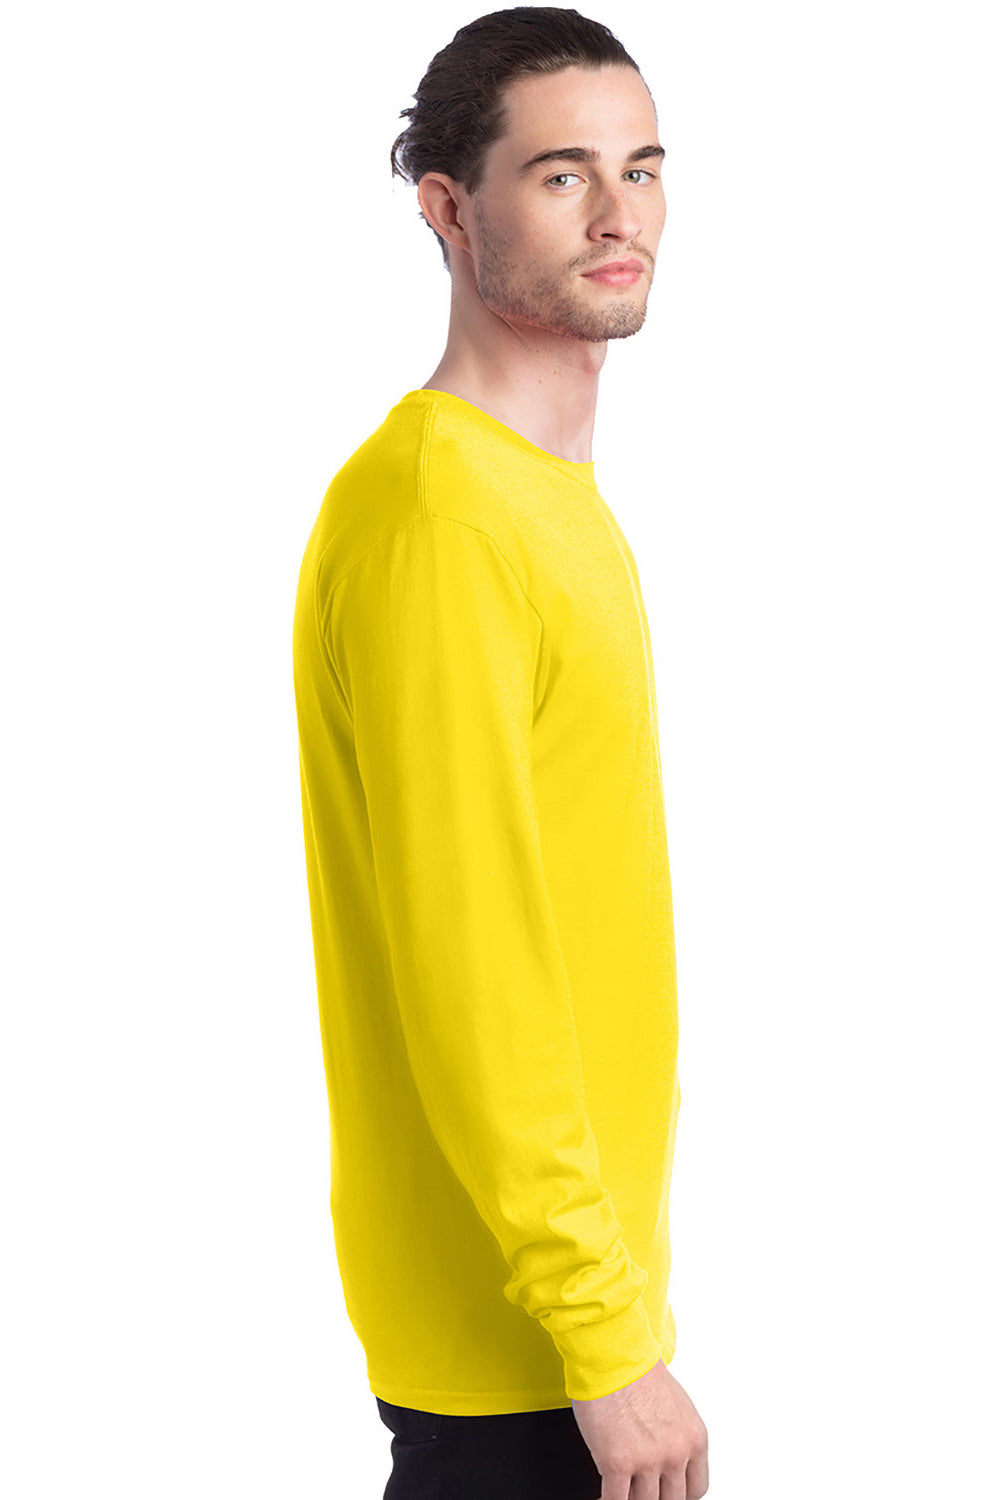 Hanes 5286 Mens ComfortSoft Long Sleeve Crewneck T-Shirt Athletic Yellow SIde